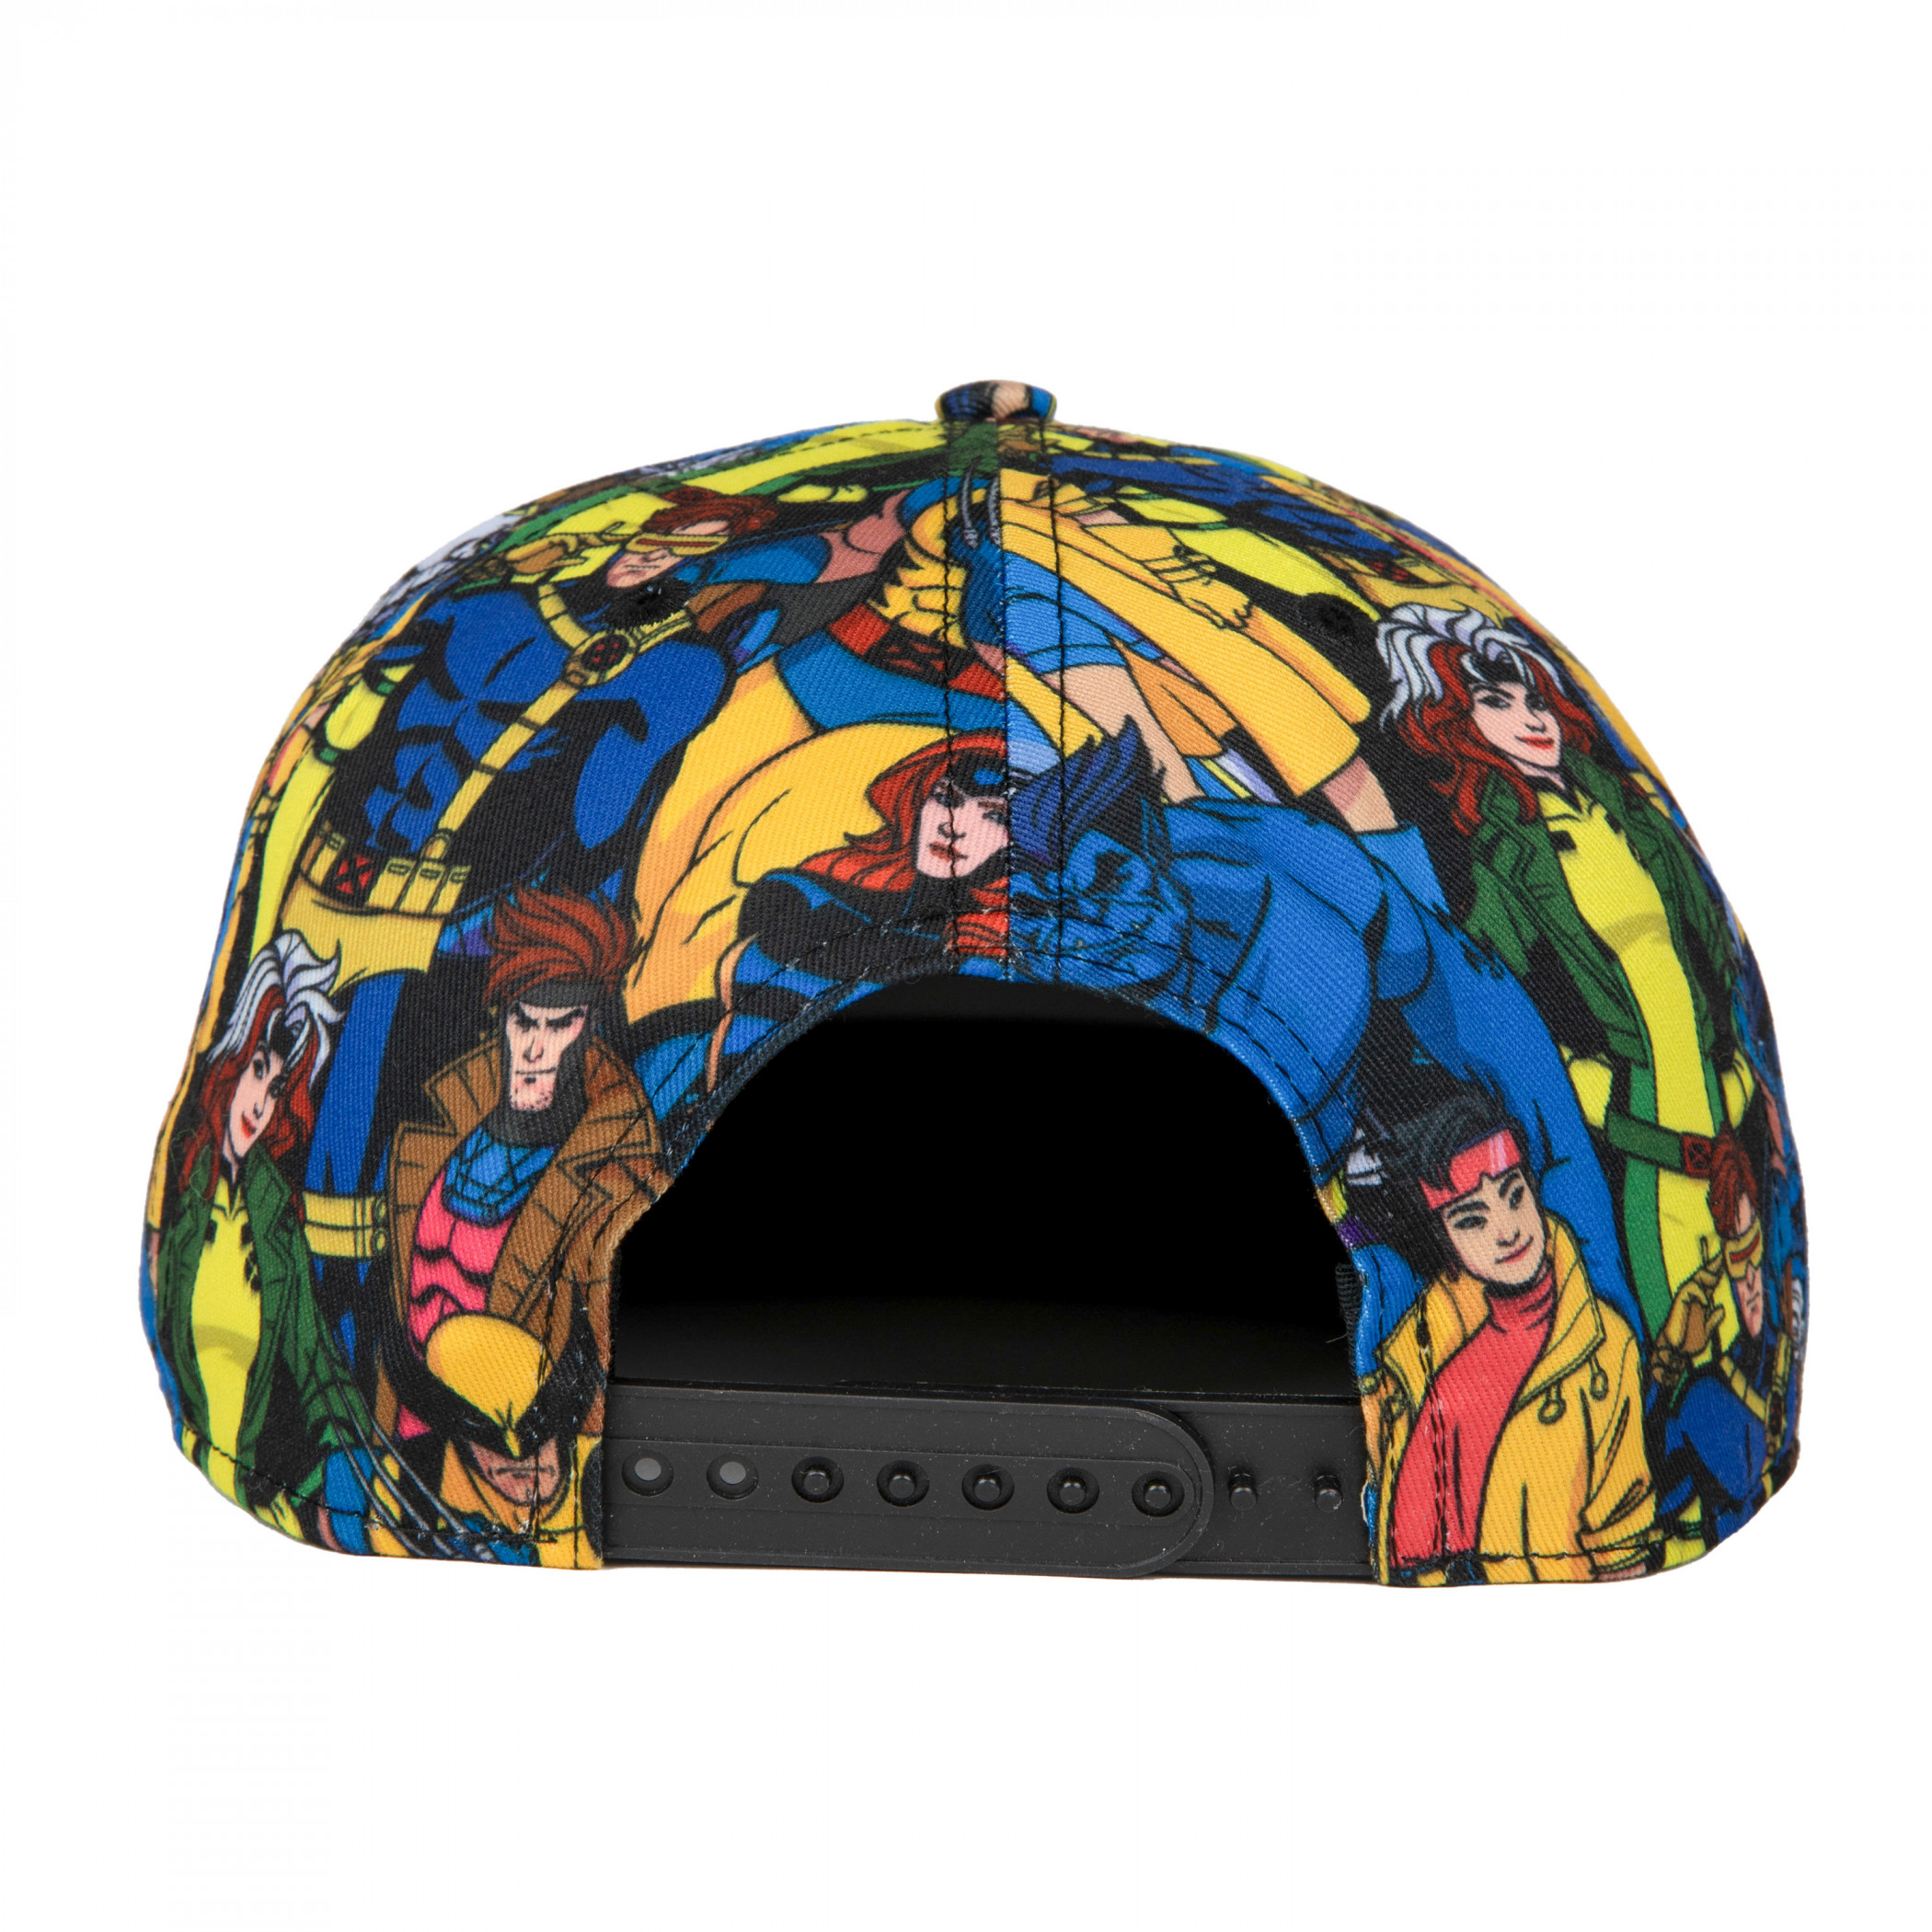 X-Men Mutants Collage Flat Brim Snapback Hat